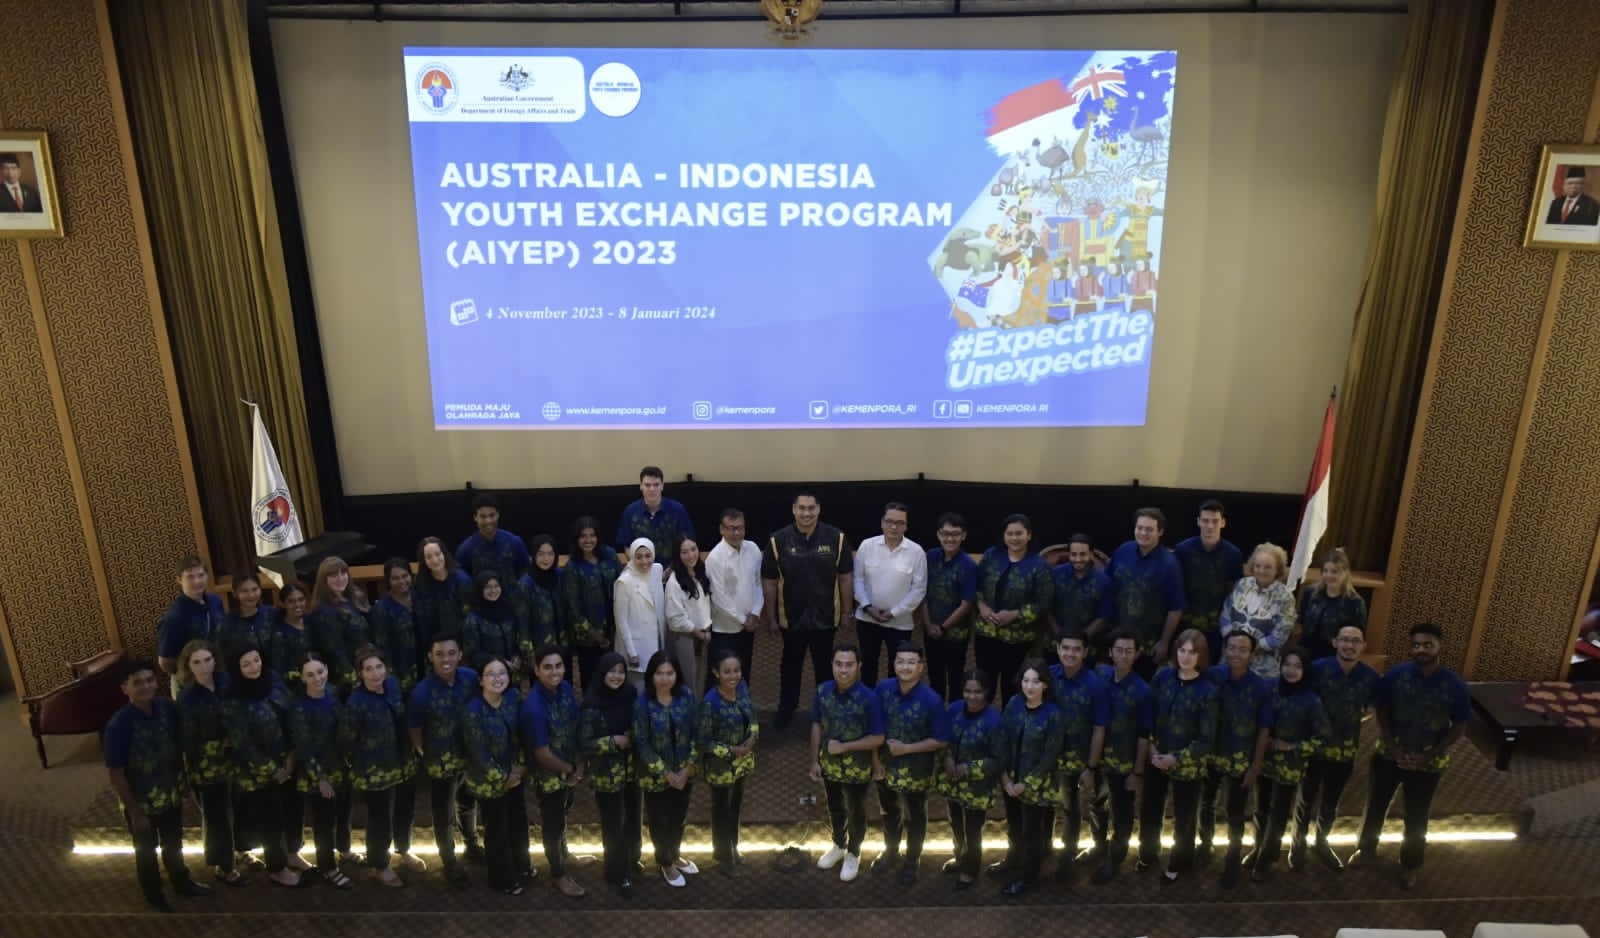 Courtesy Call Australia - Indonesia Youth Exchange Program (AIYEP) 2023